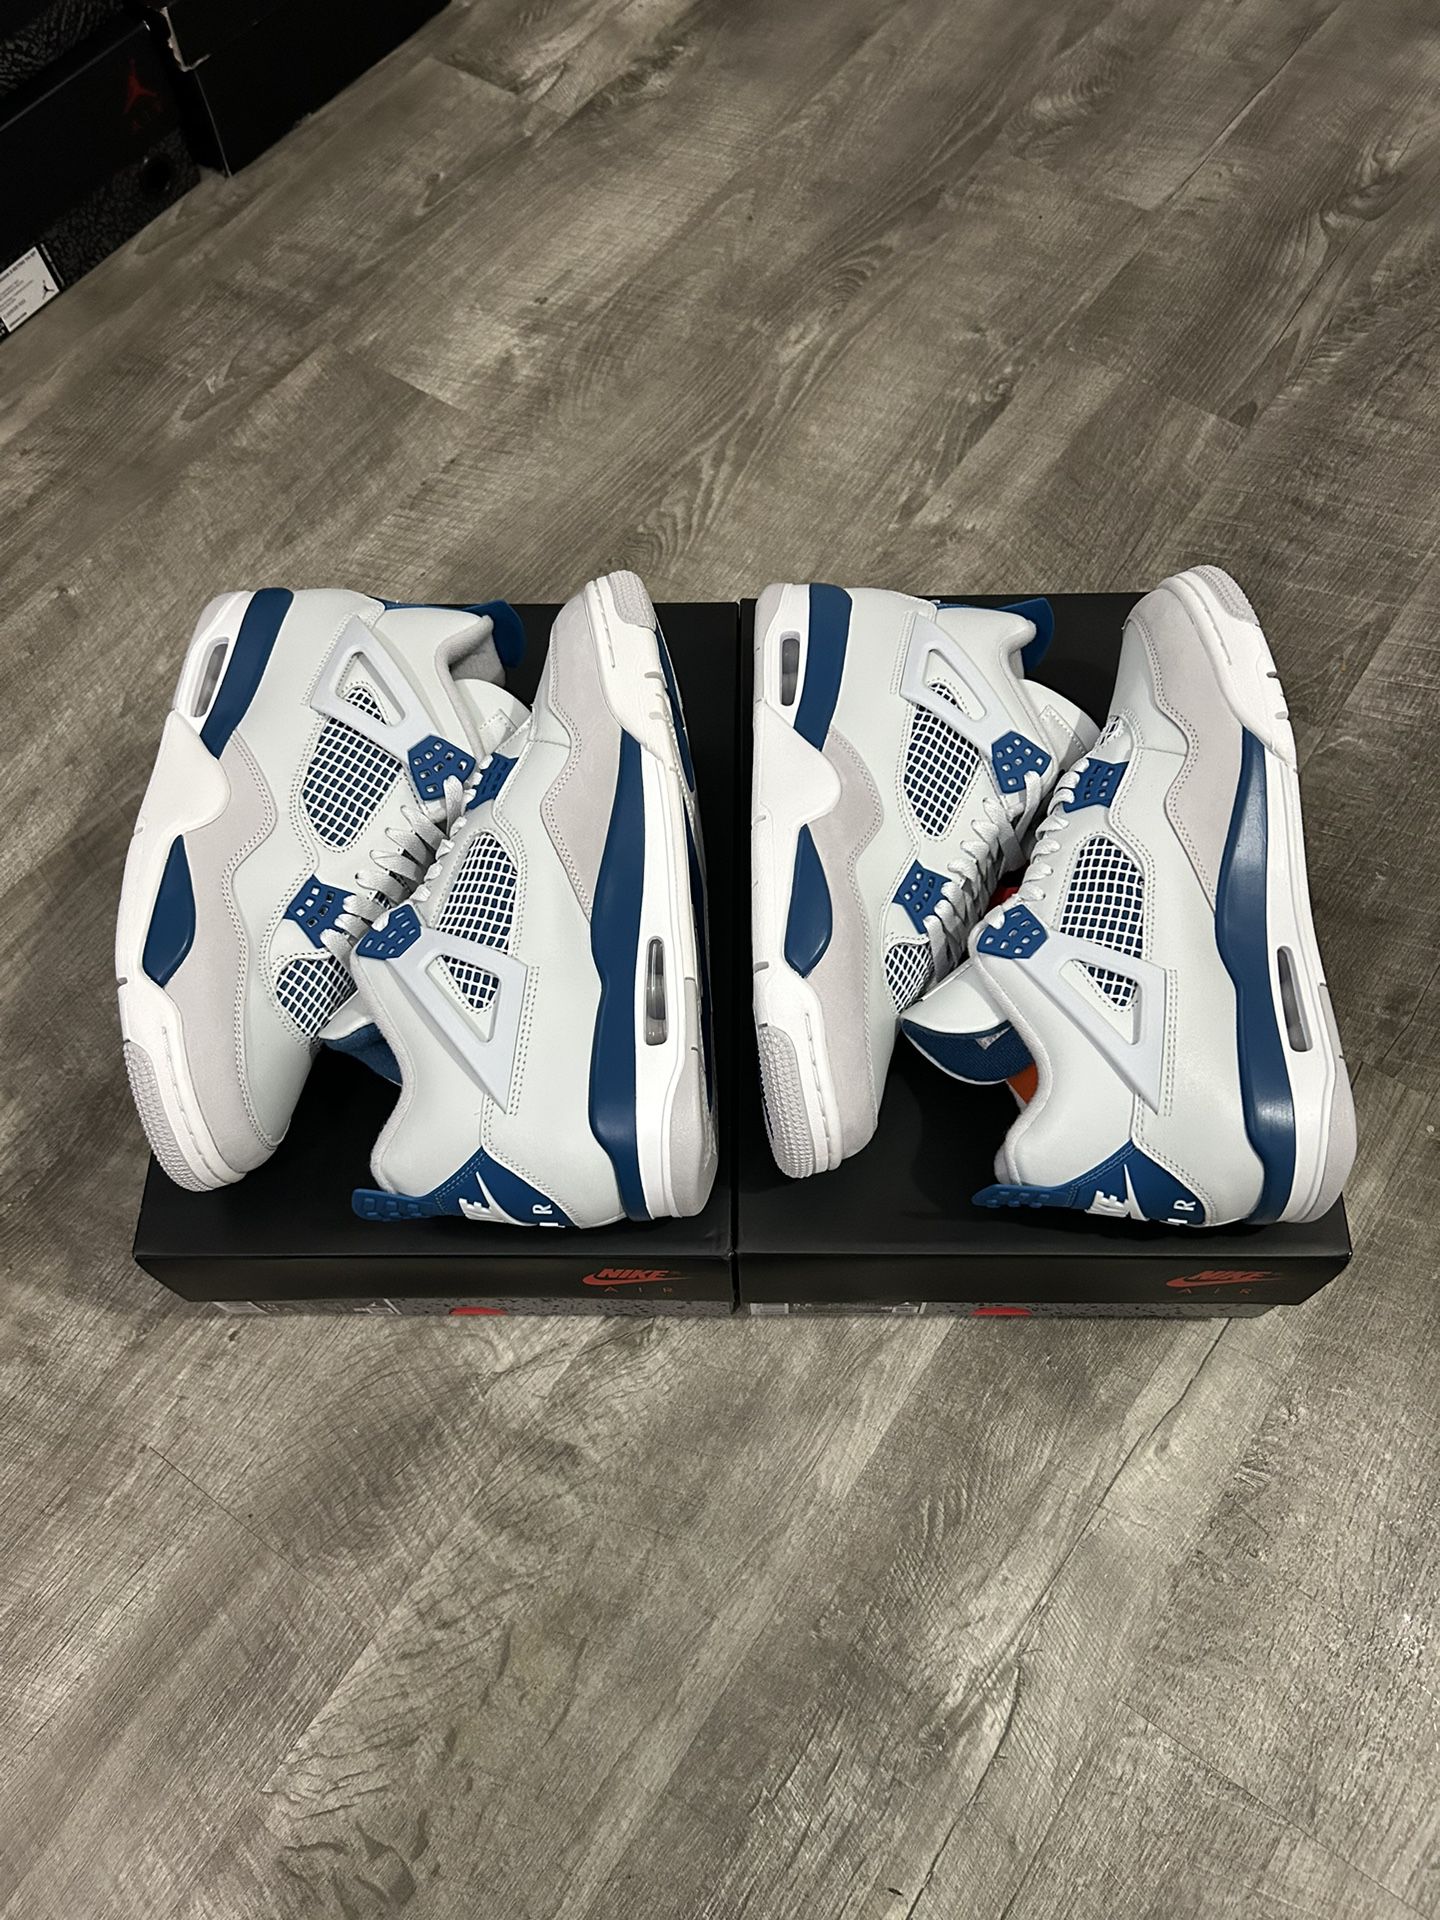 Jordan 4 “Military Blue” Size 9.5, 10